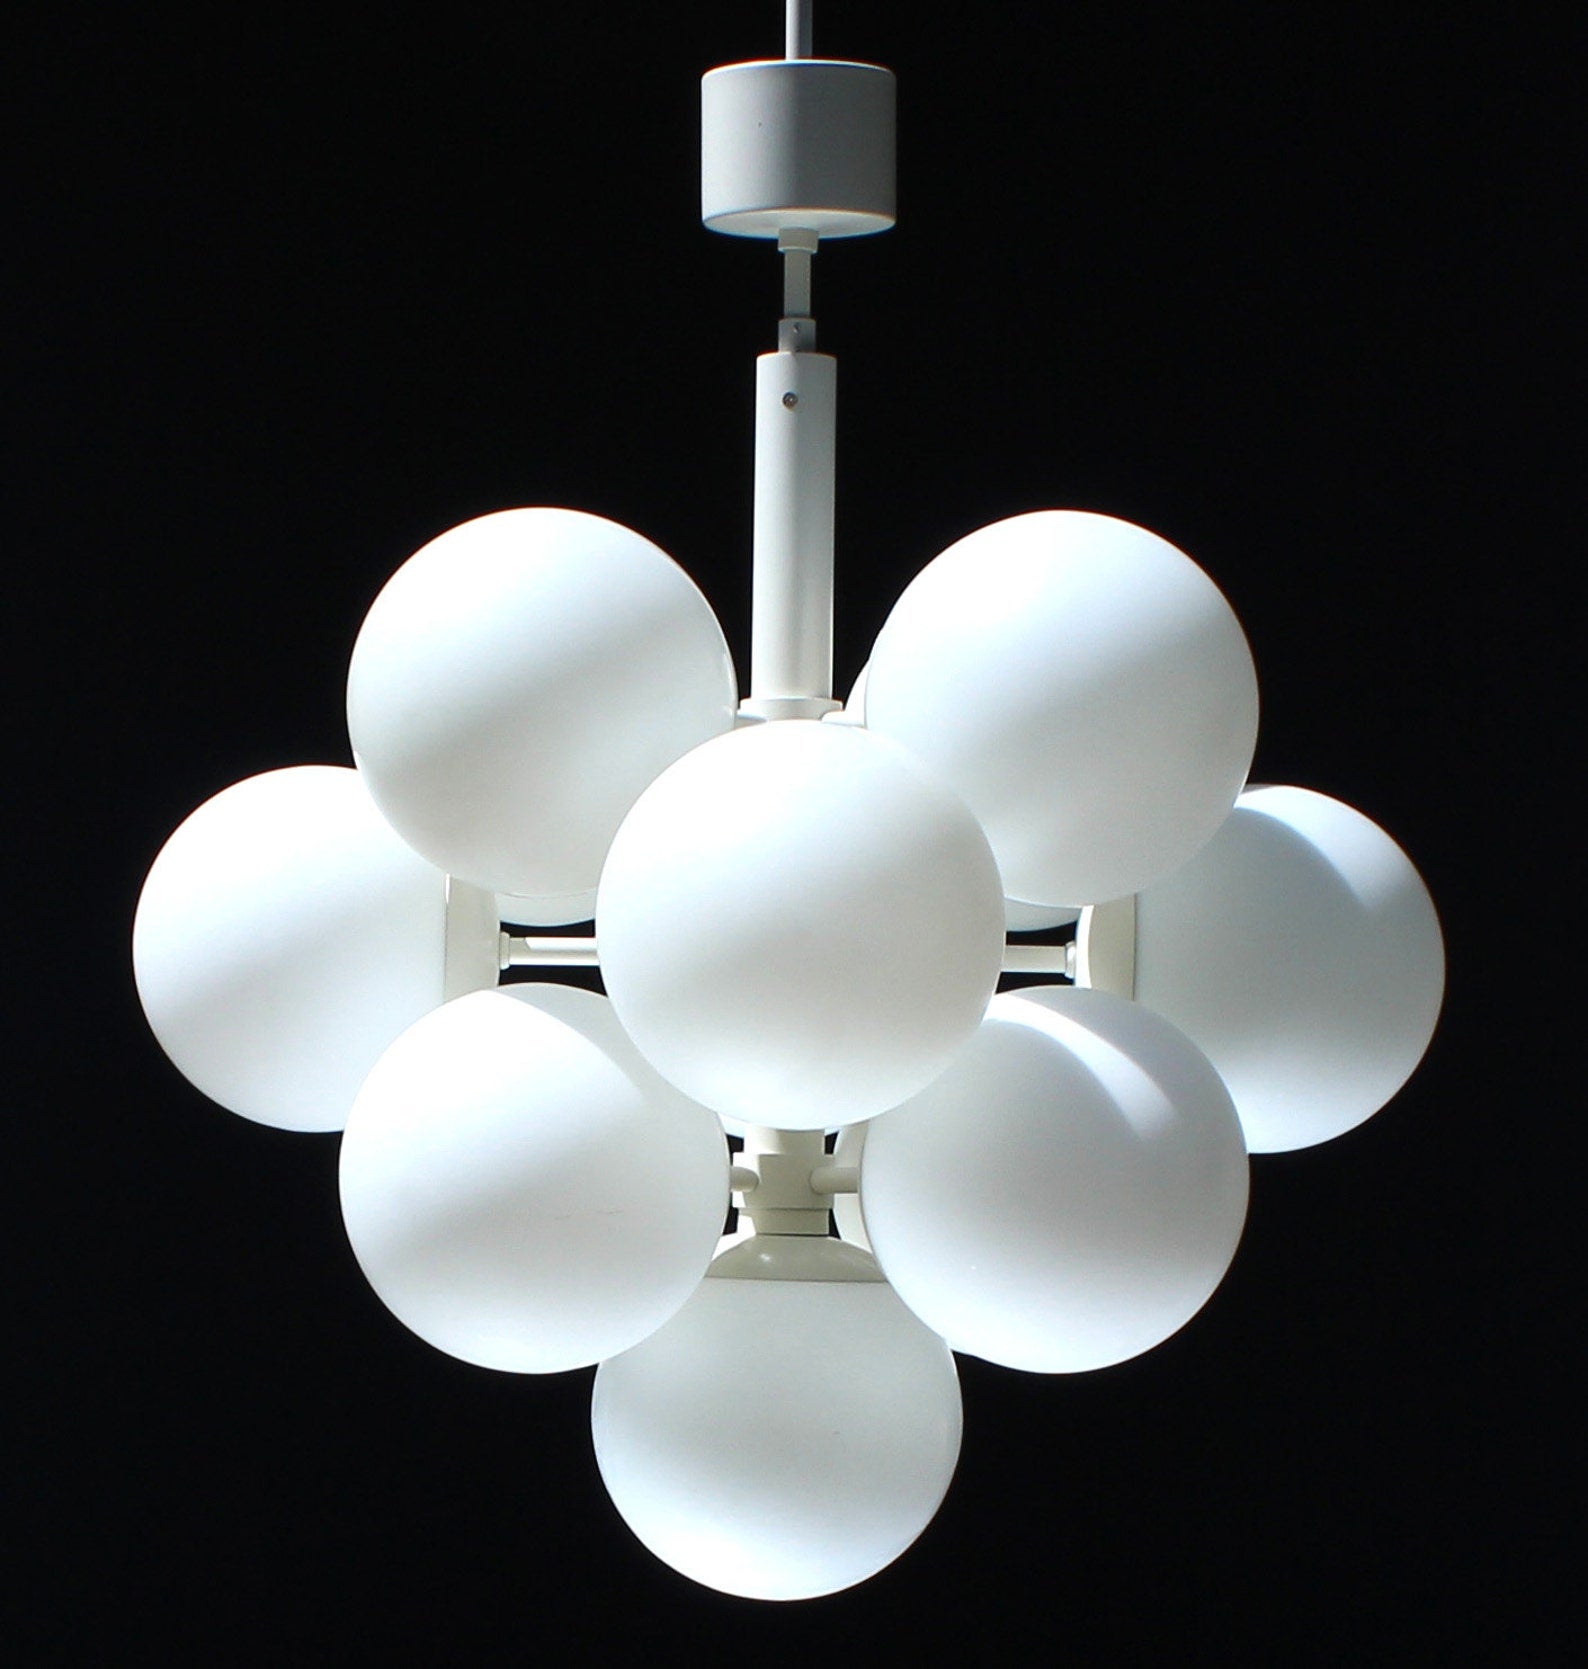 Organic 13 lights (e14) opal glass chandelier by kaiser germany, ceiling lamp 70s.
Measures: diameter 20